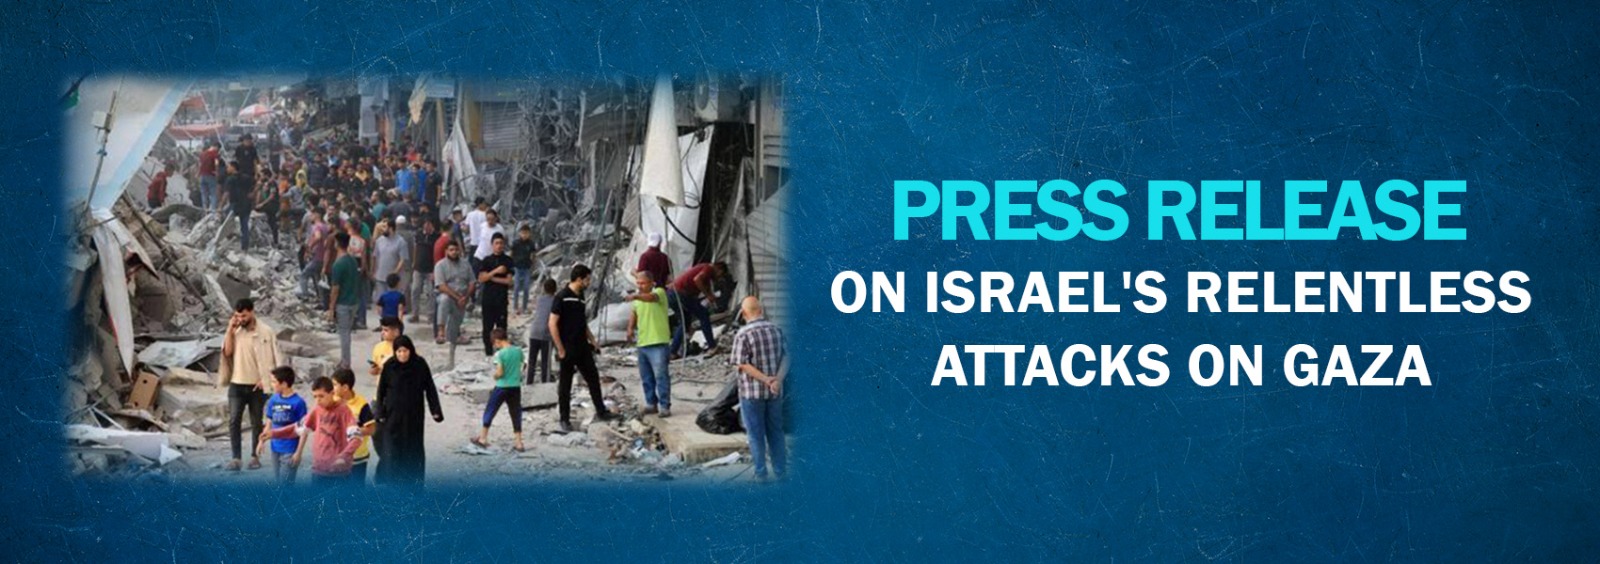 Press Release on Israel's Relentless Attacks on Gaza